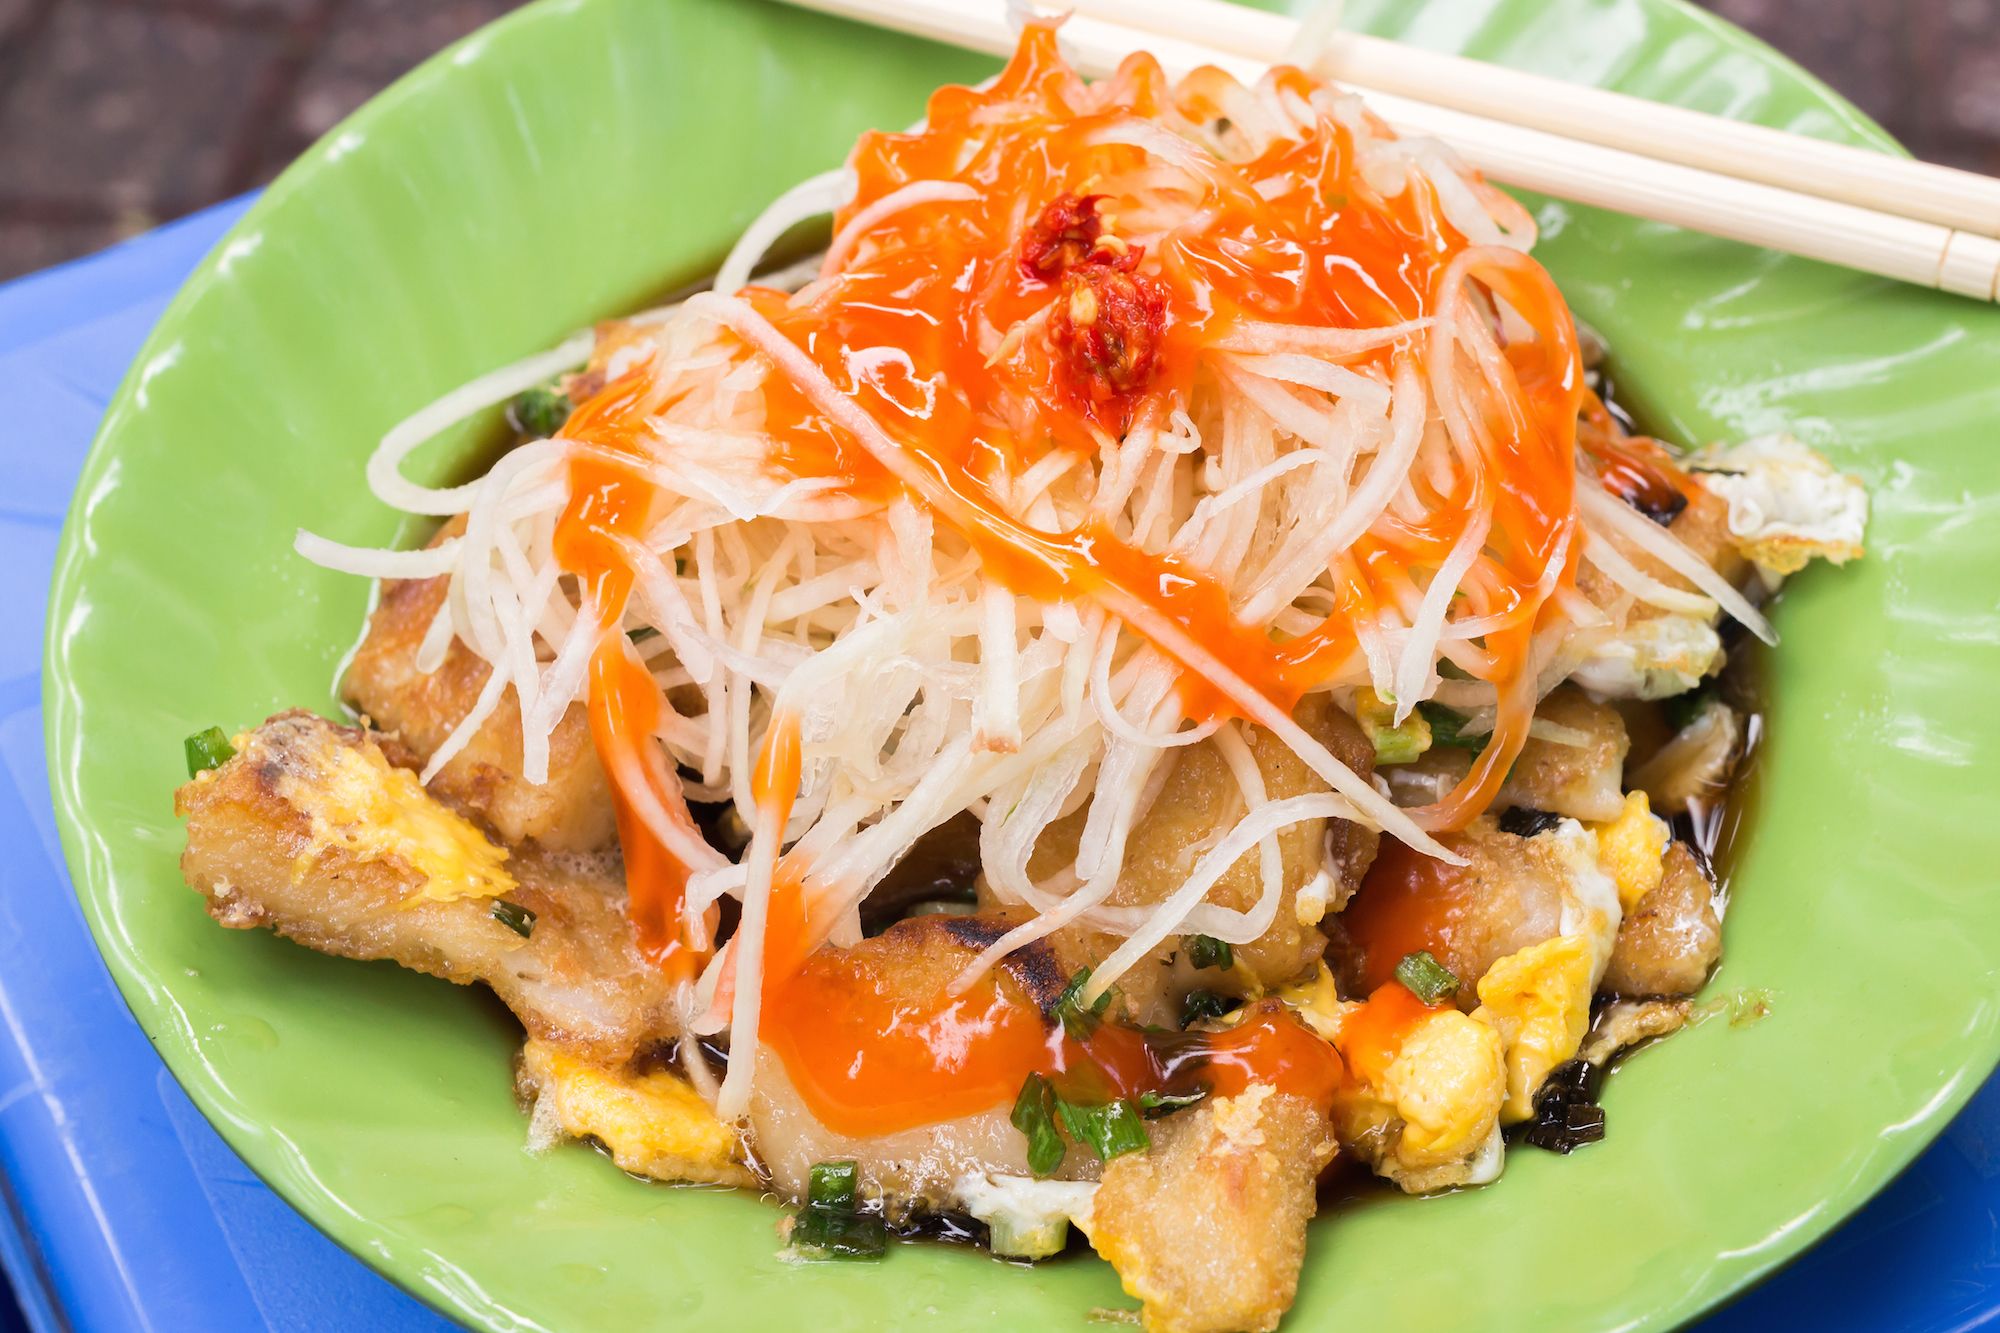 gyldige shabby økse Vietnamese food: 40 delicious dishes to try in Vietnam | CNN